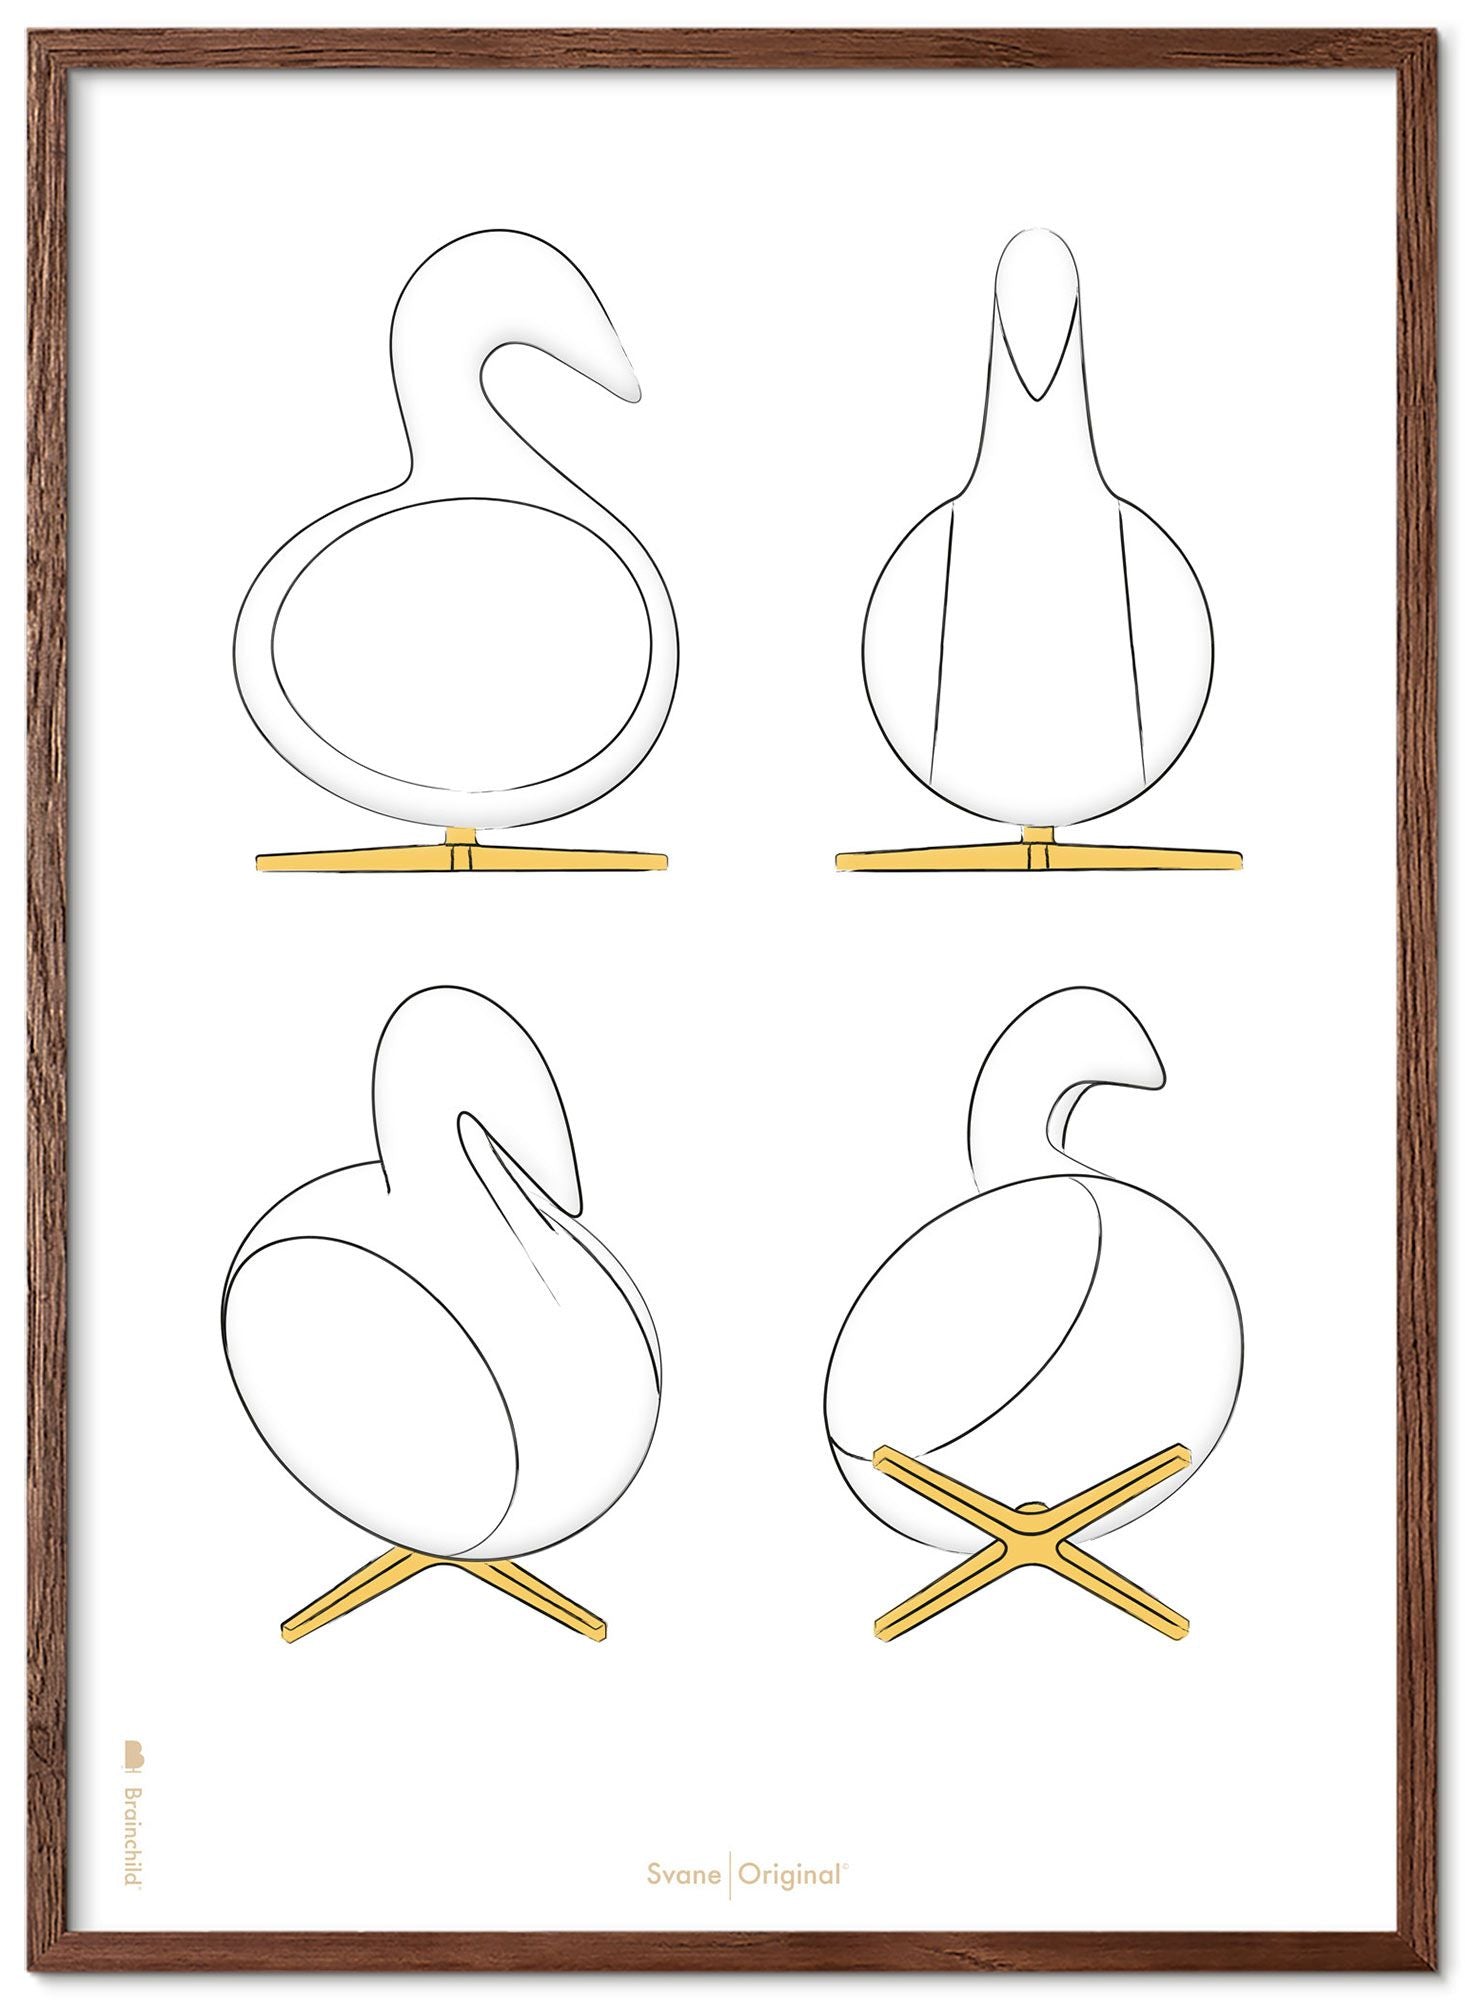 Brainchild Swan Design Sketches Poster Frame Made Of Dark Wood A5, White Background